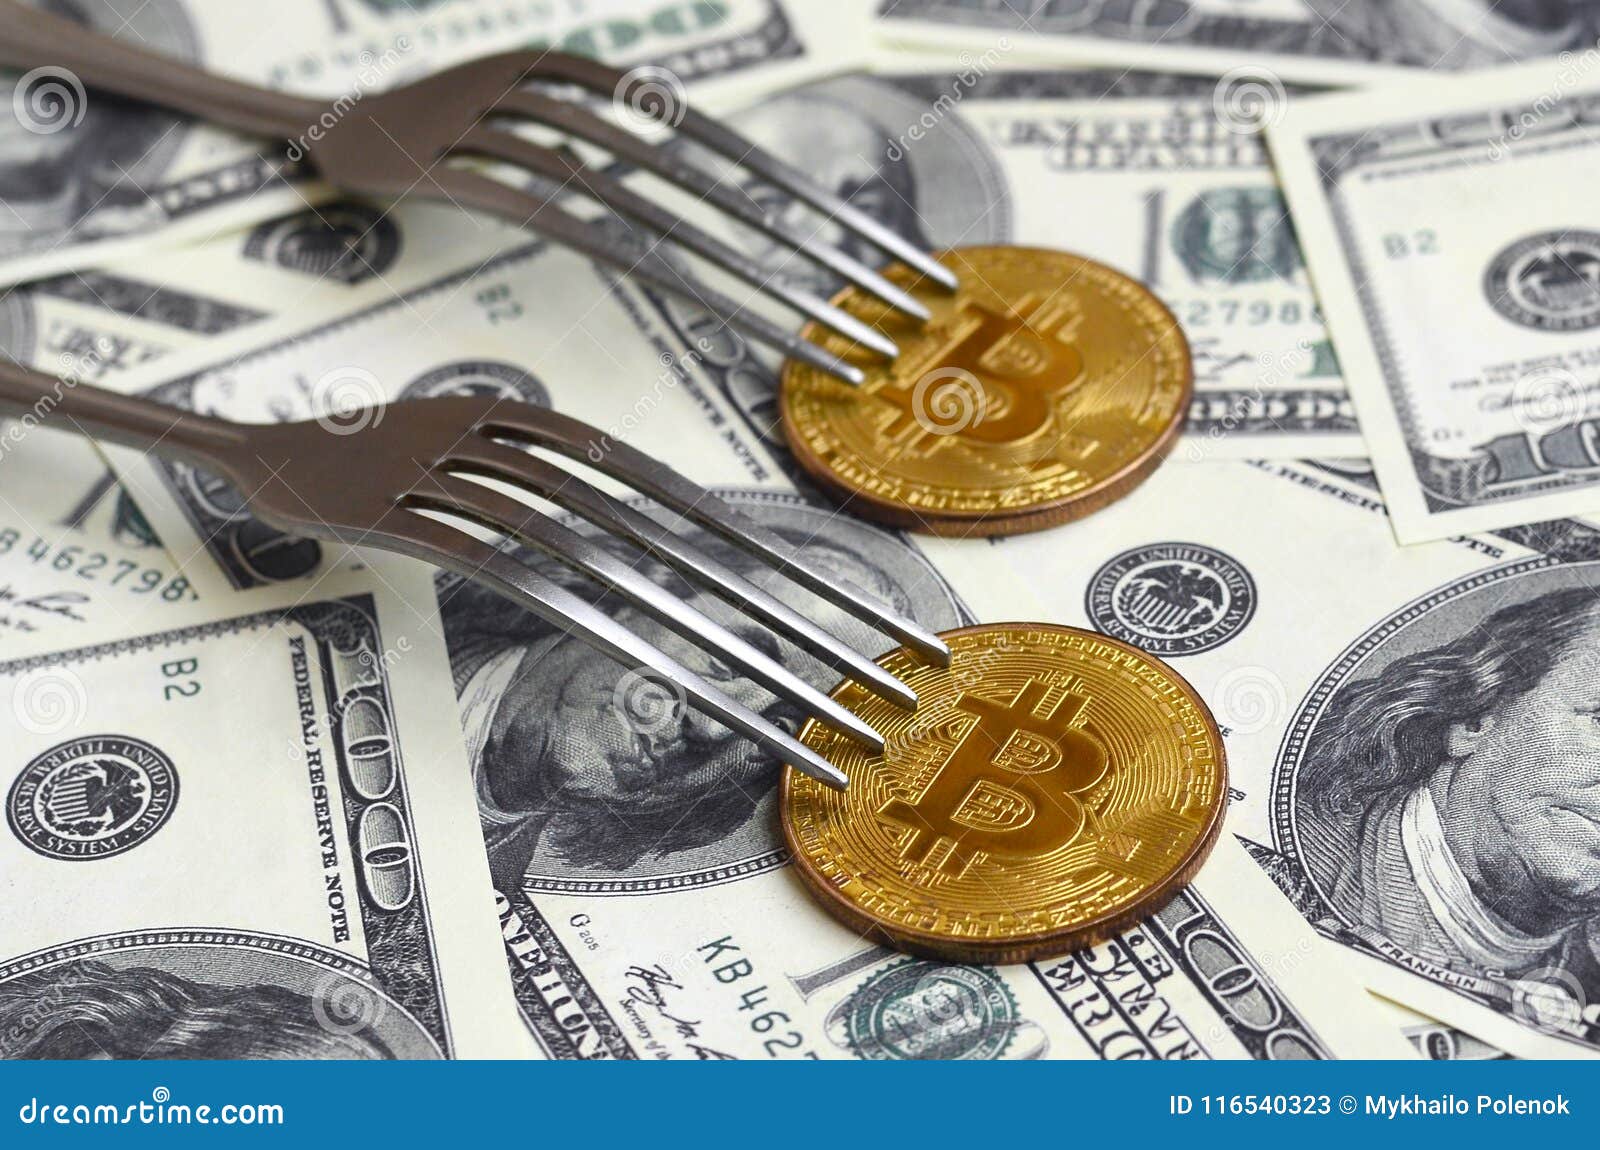 Bitcoin gold fork blockchain crypto growing